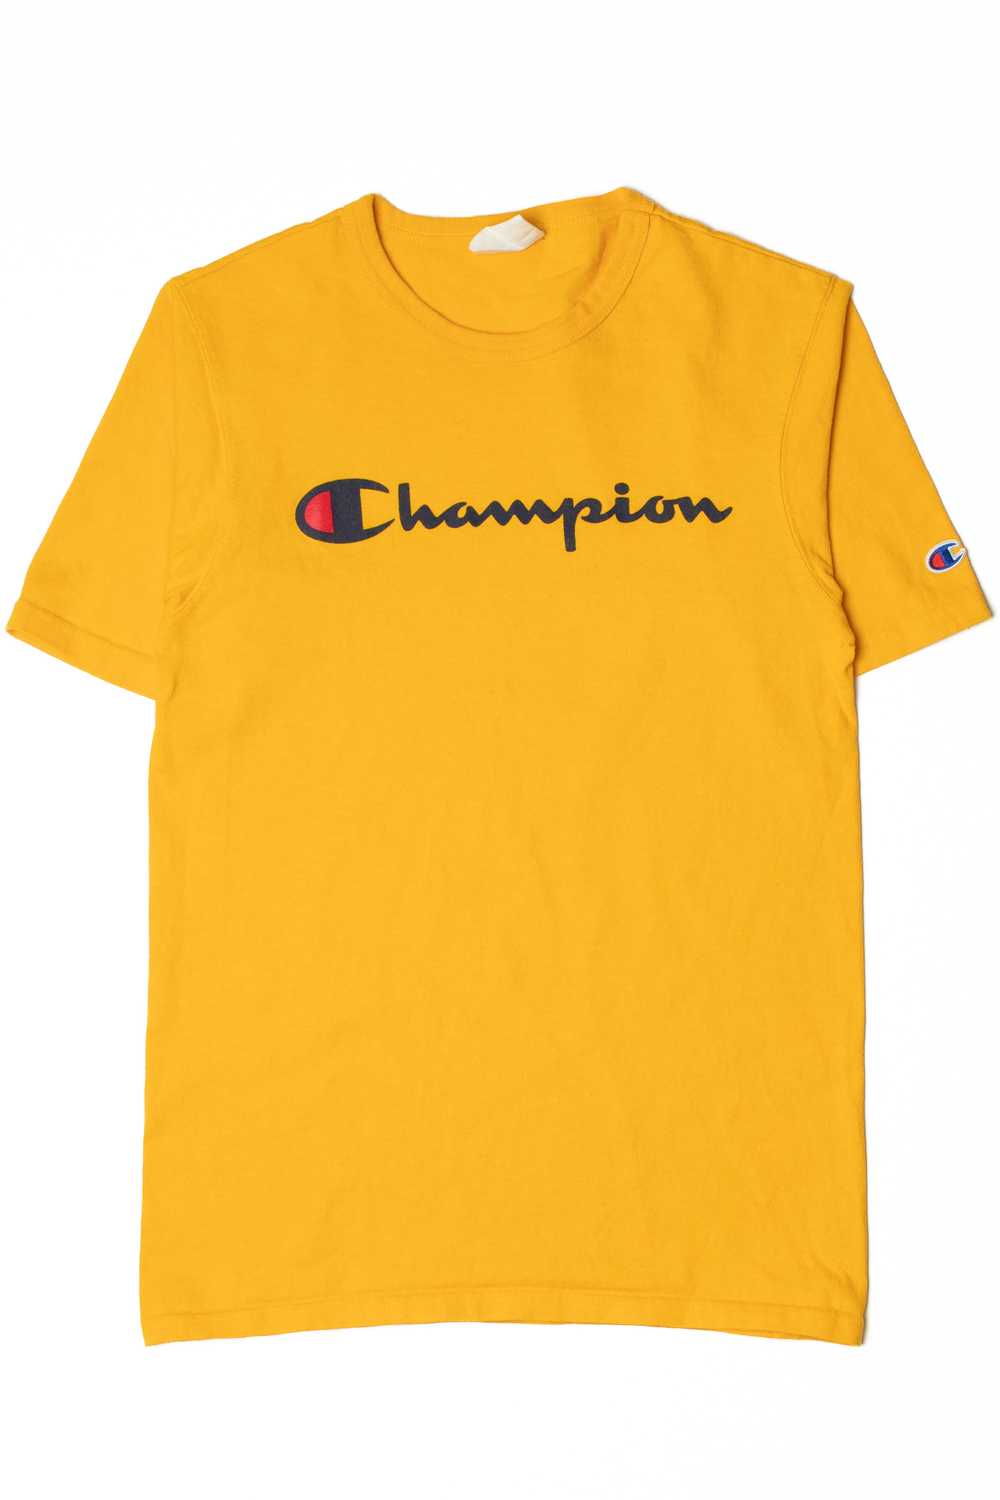 Vintage Champion T-Shirt (1990s) 8629 - image 1